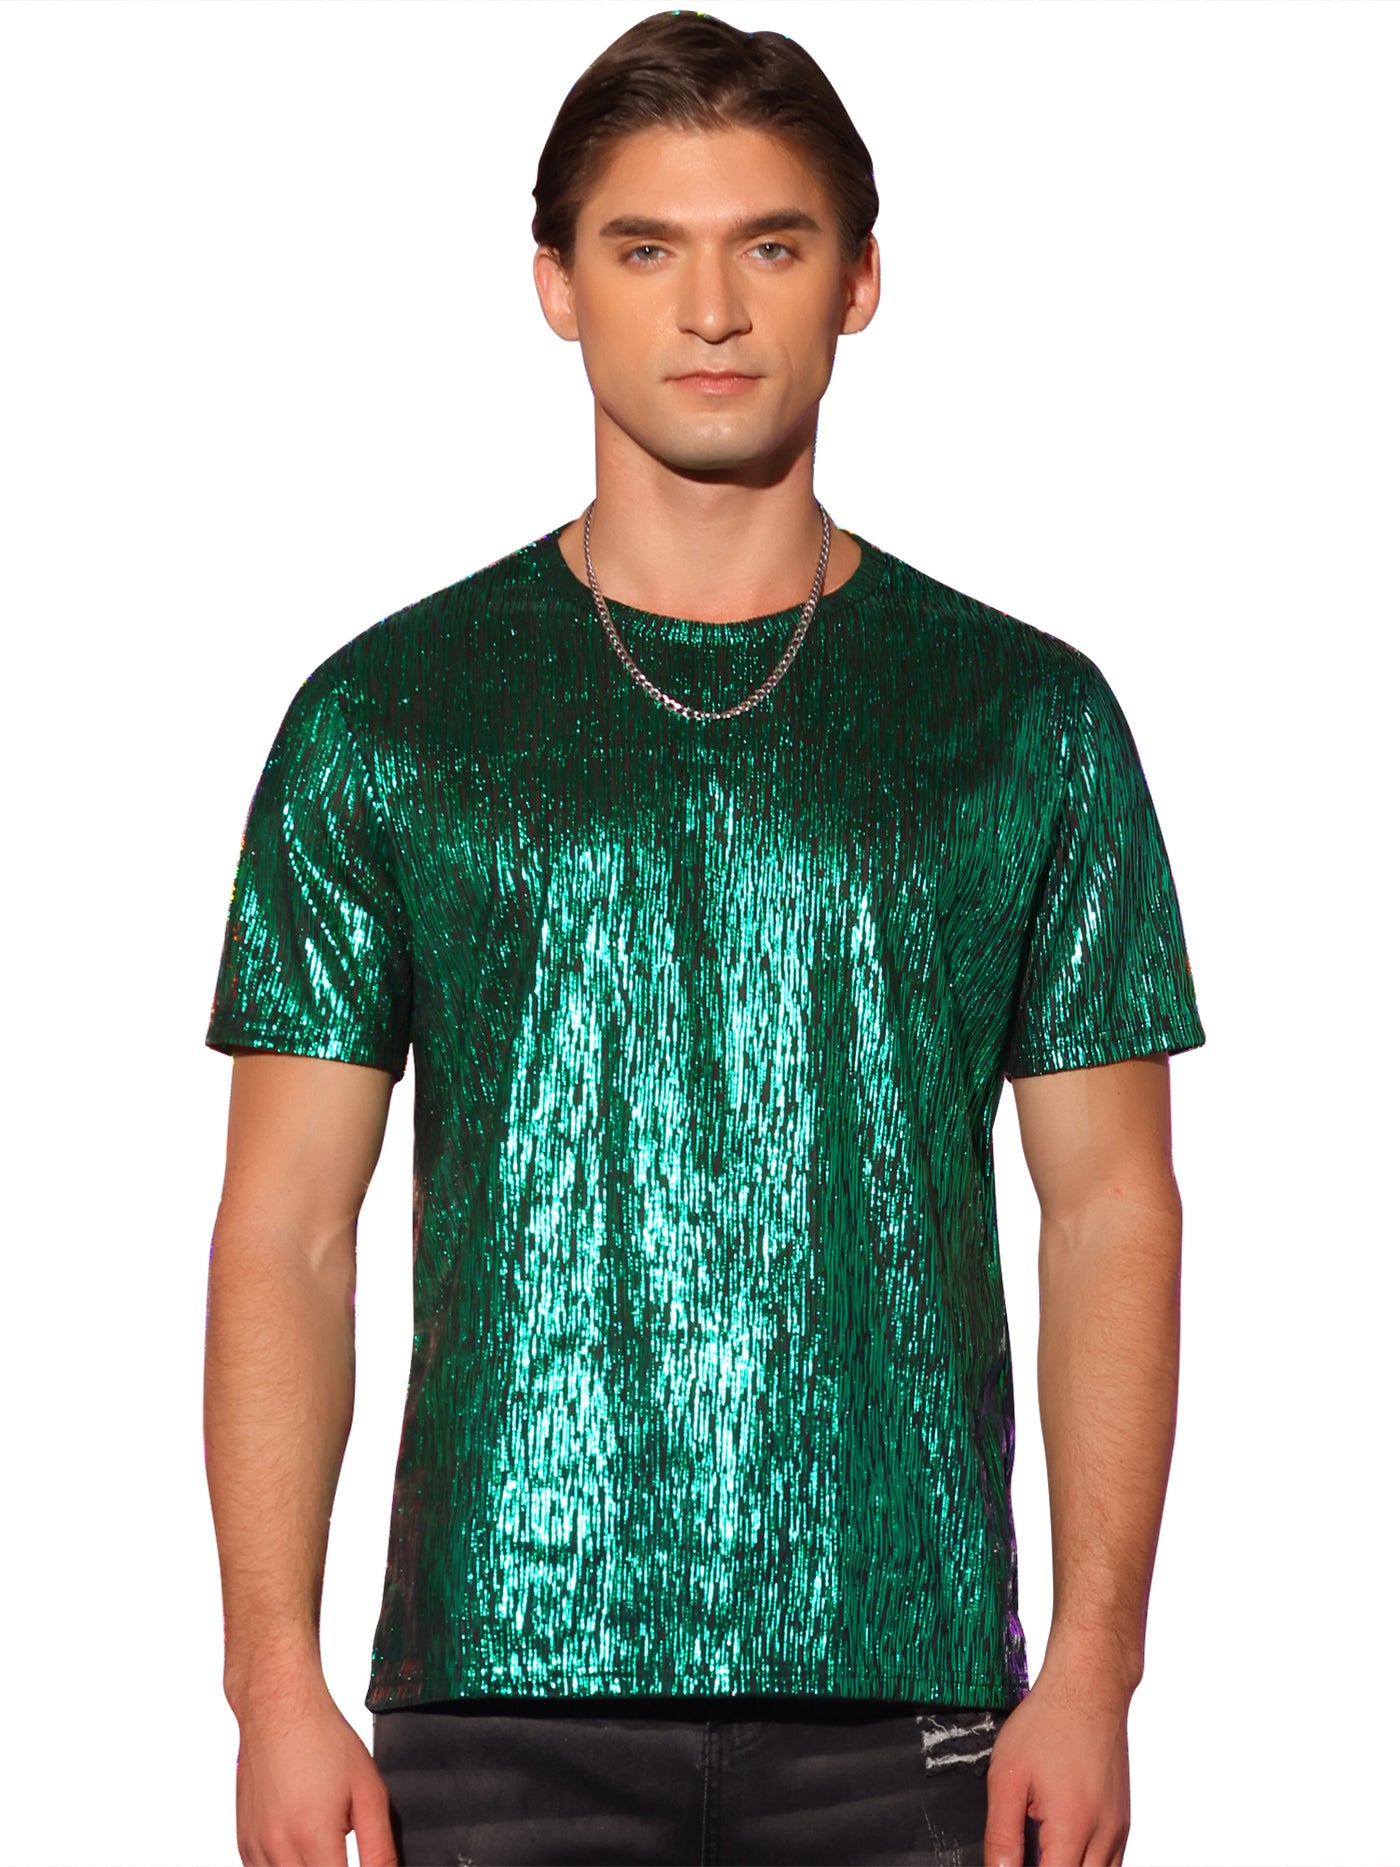 Bublédon Metallic Shiny T-Shirt for Men's Round Neck Short Sleeves Club Sparkle Tee Top